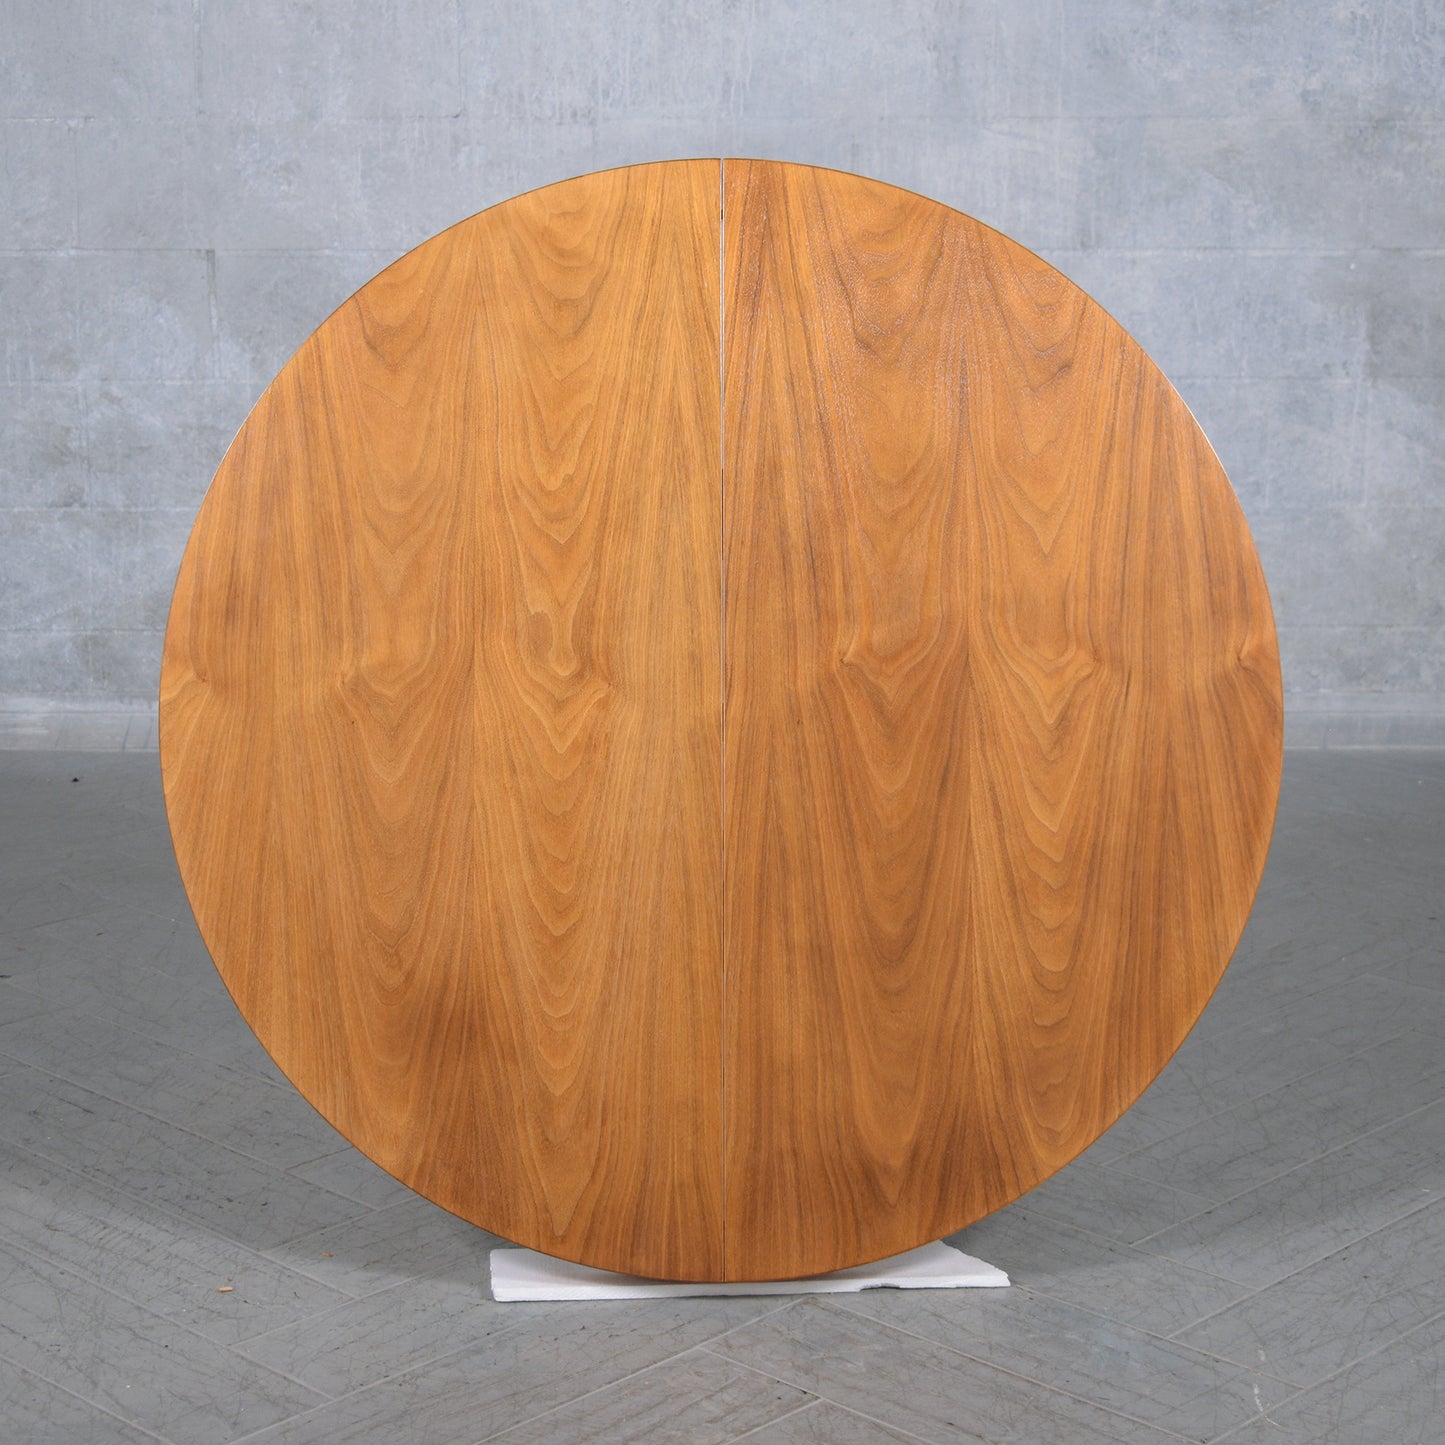 Mid-Century Modern Round Walnut Dining Table - Extendable & Restored